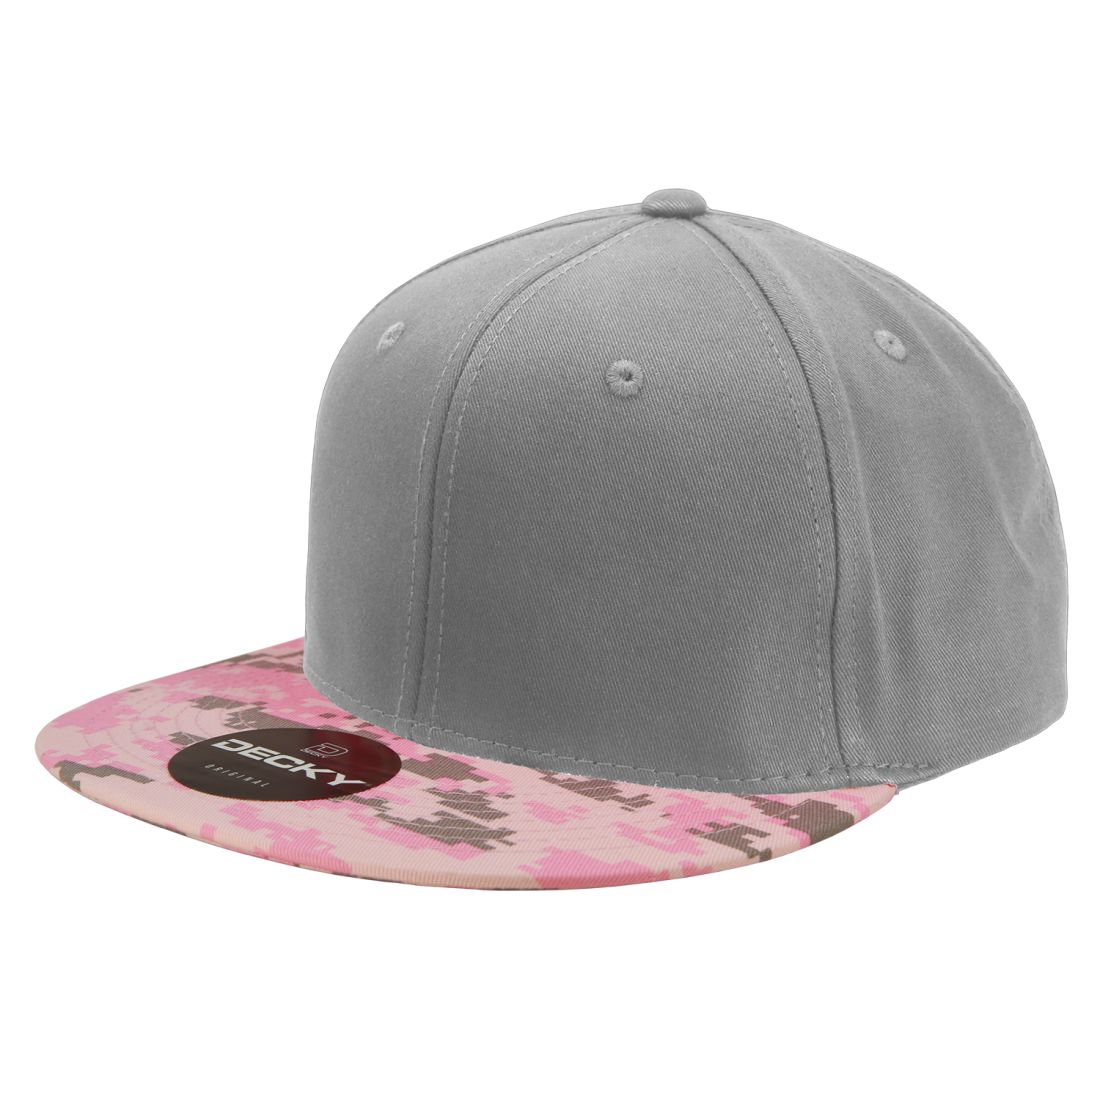 Pink Digital/Grey/Grey color variant